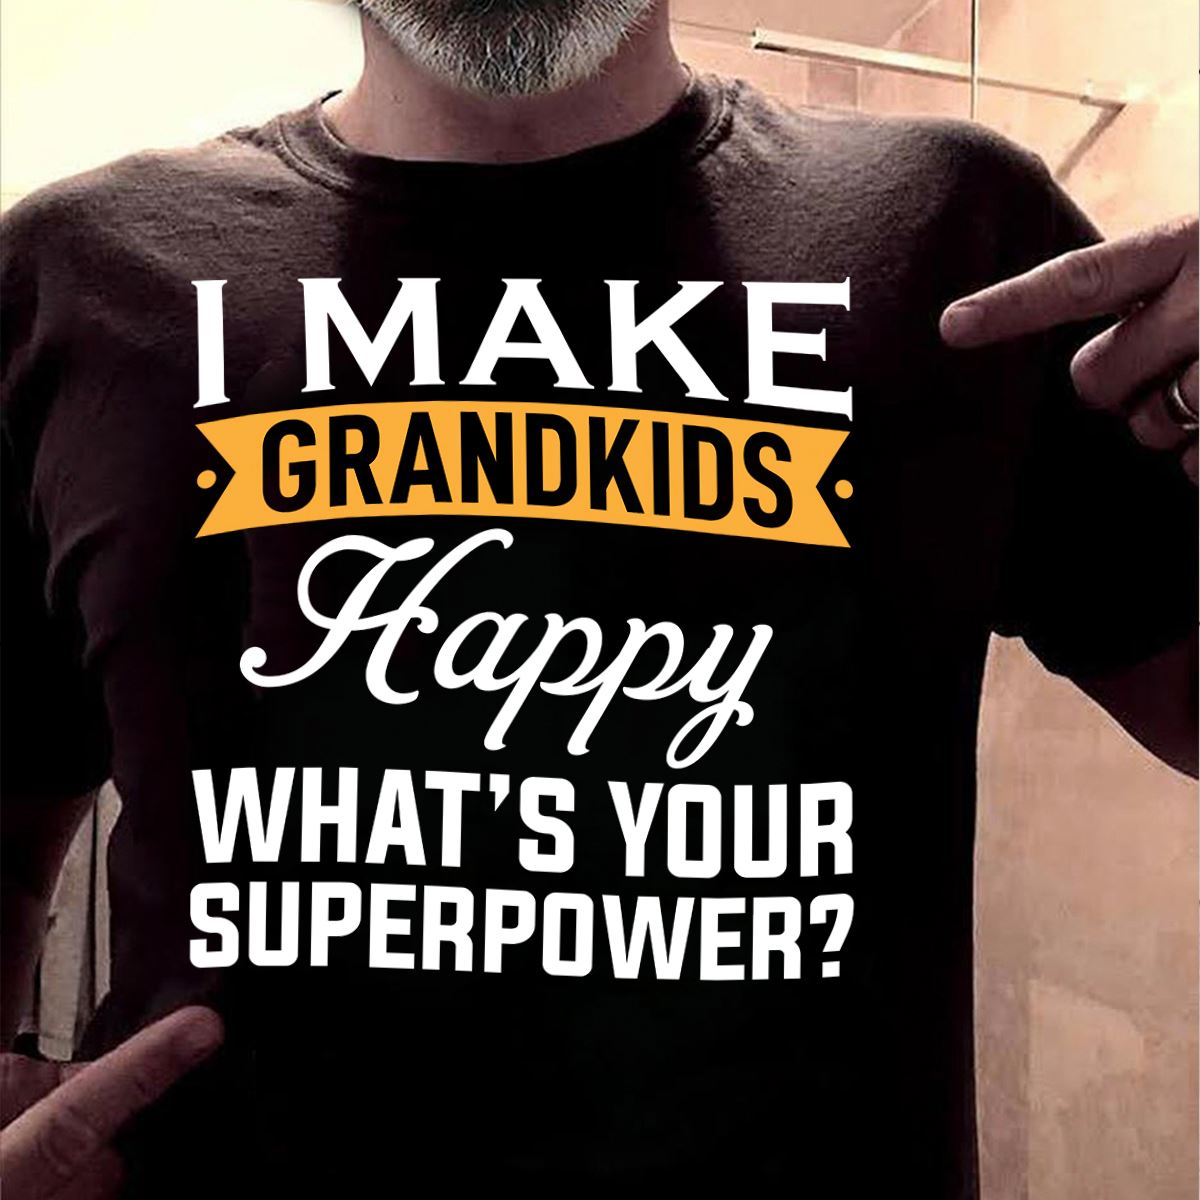 I make grandkids happy what's your superpower - Grandparent and grandkids